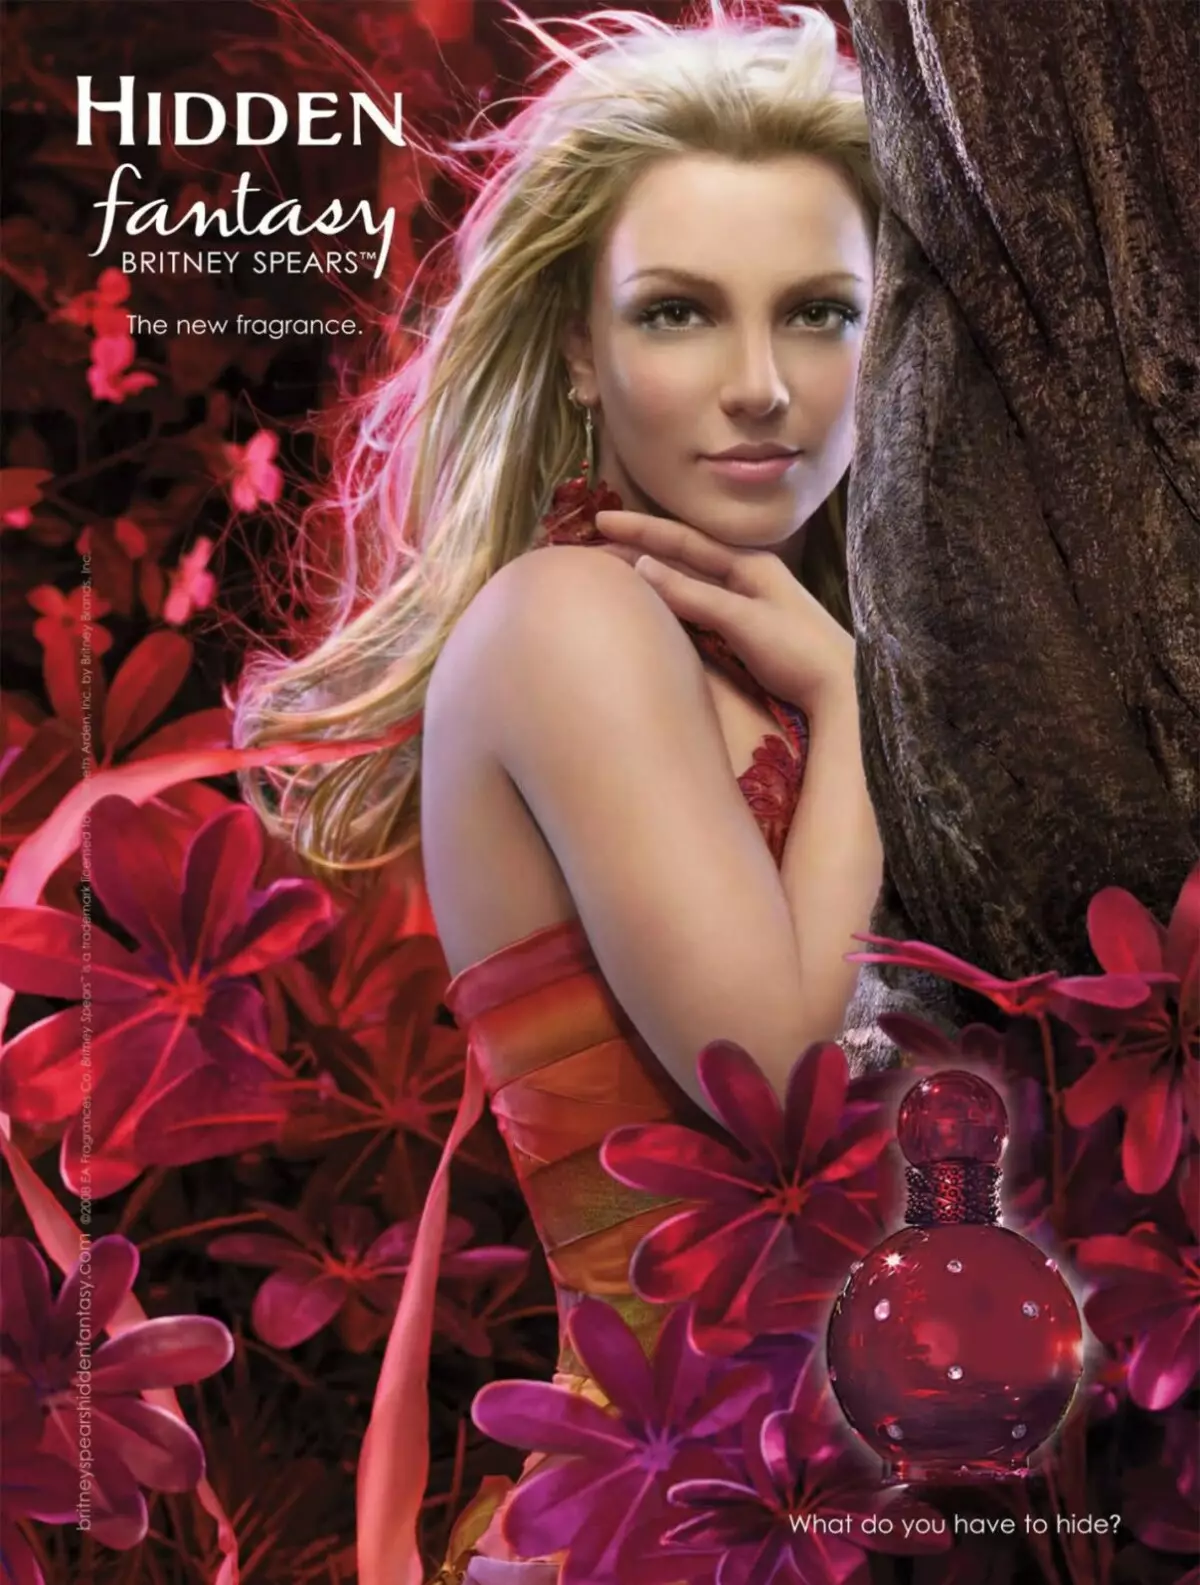 Perfuy Britney Spears: perfume e vaso sanitário, fantasia, fantasia da meia-noite e outros sabores da marca 25313_8